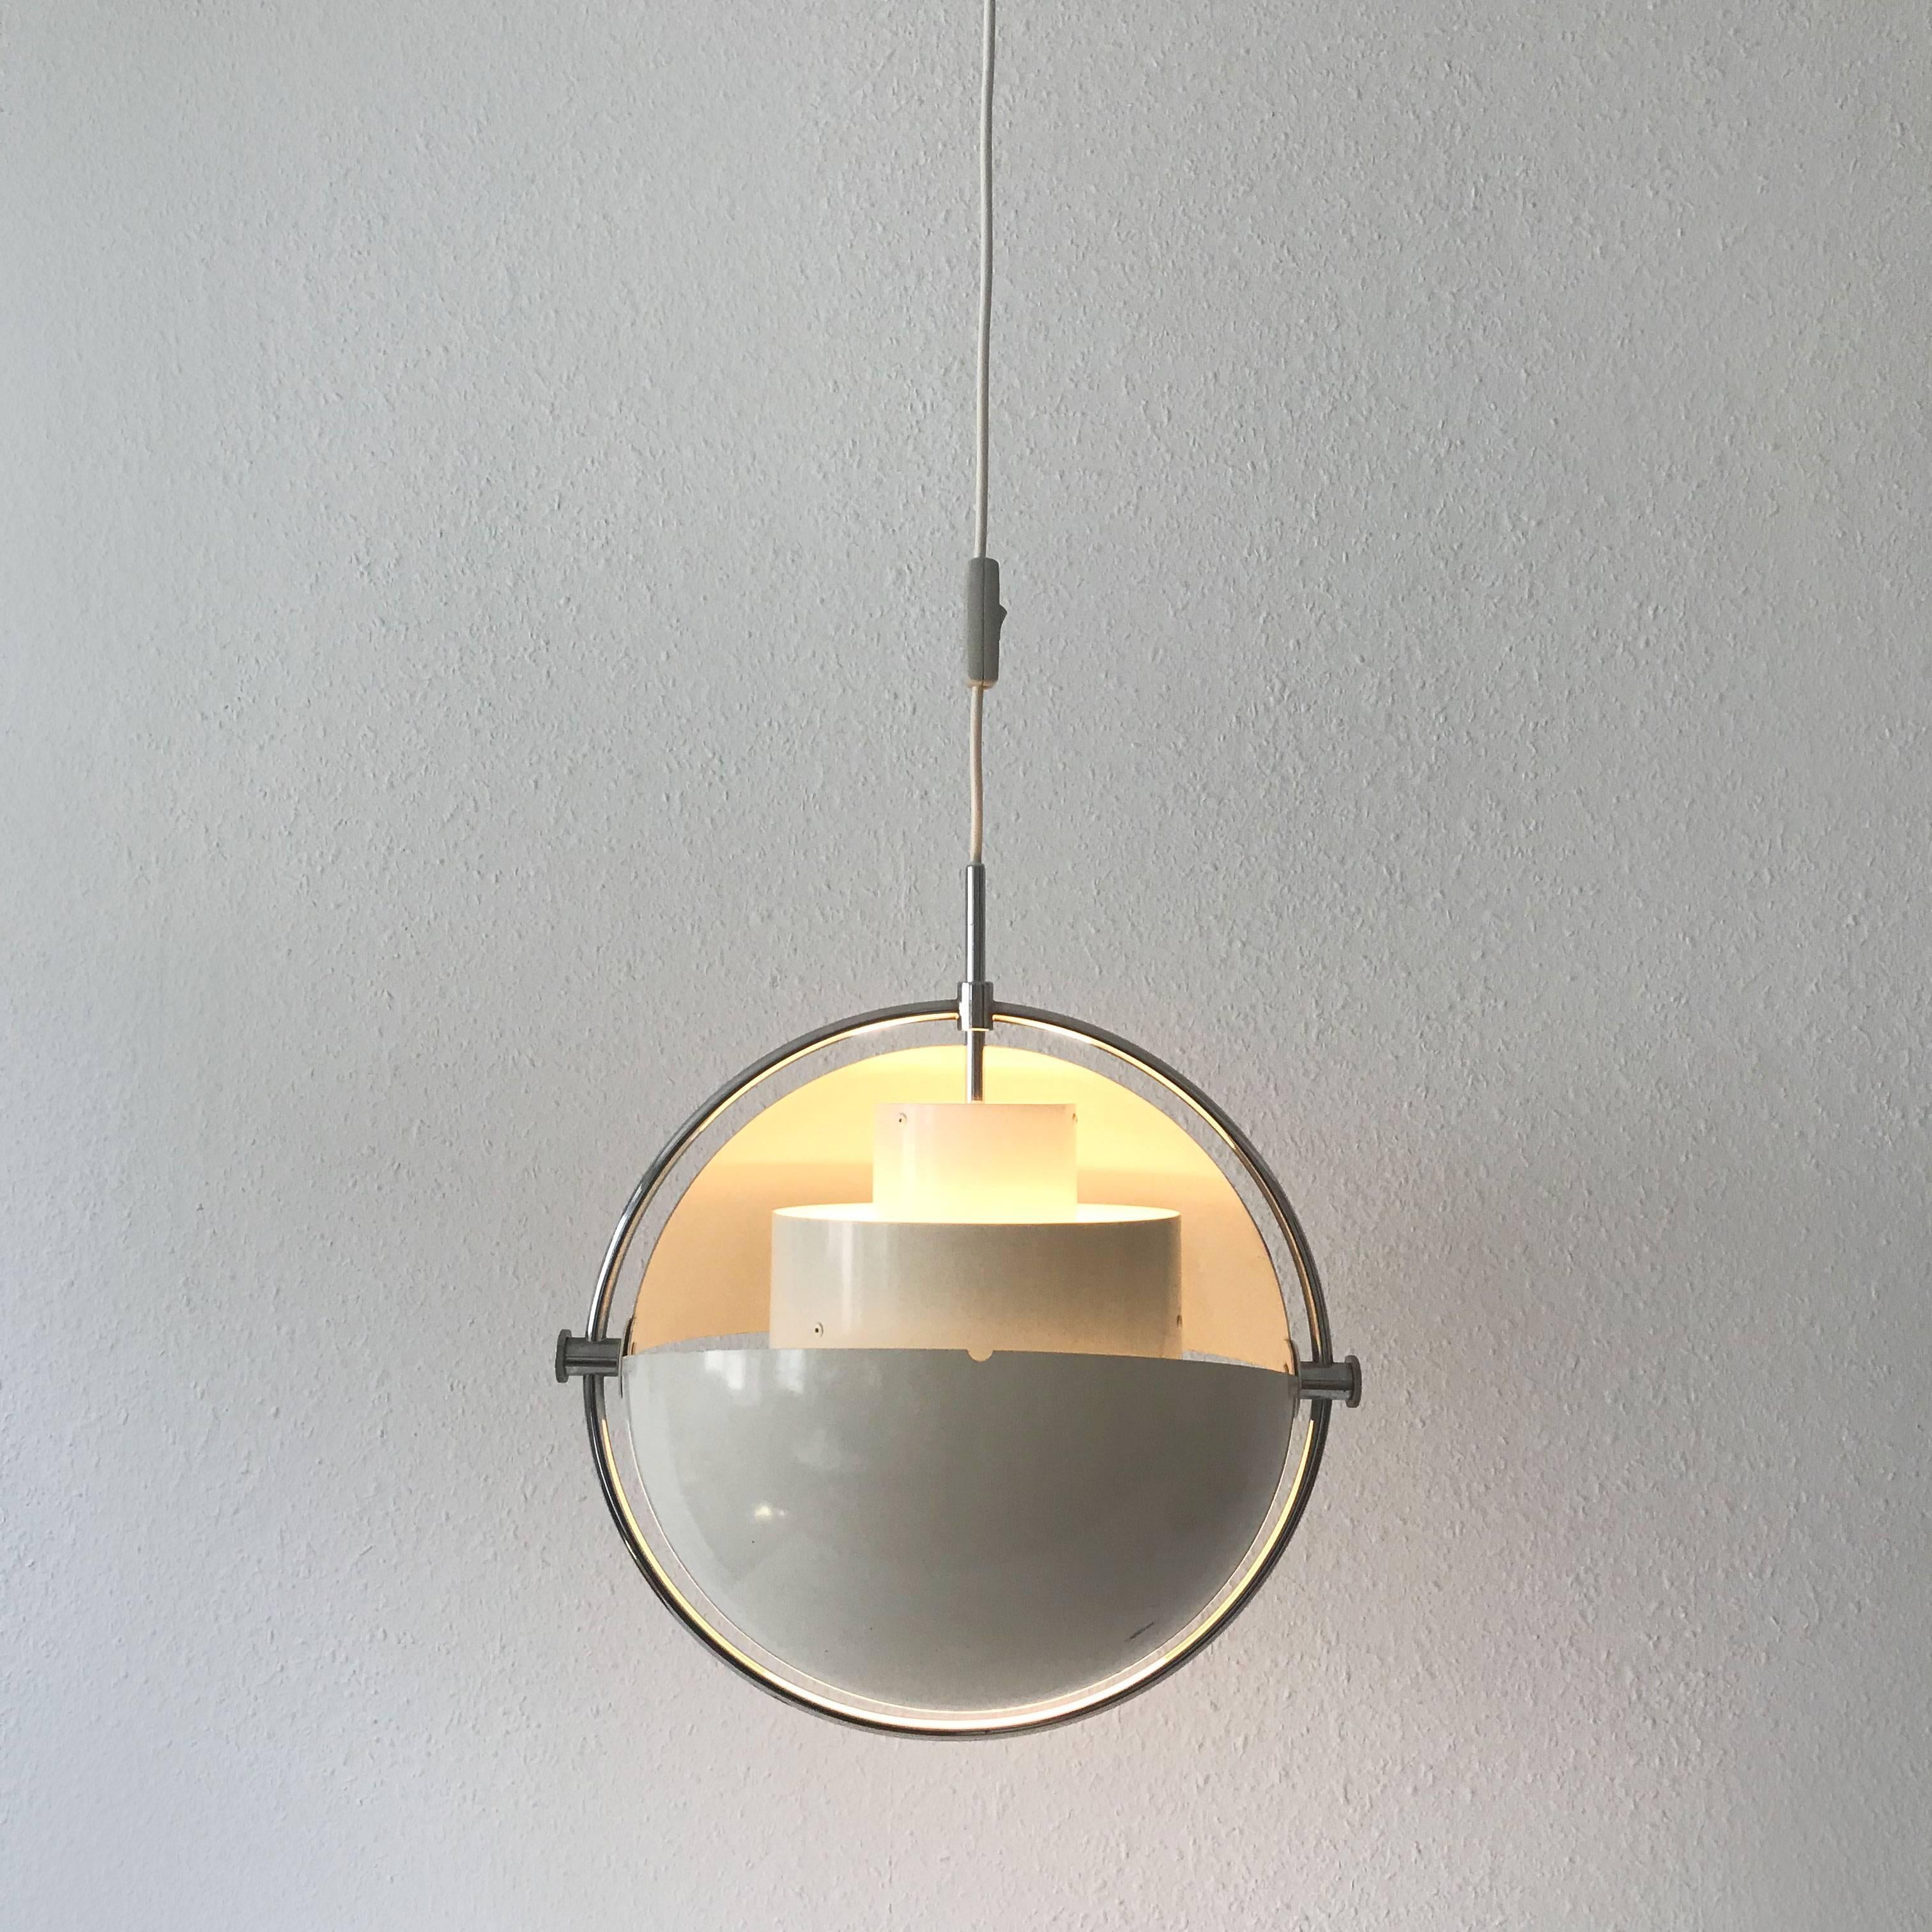 Late 20th Century Original Multi-Lite Pendant Lamp by Louis Weisdorf for Lyfa 1974 Denmark